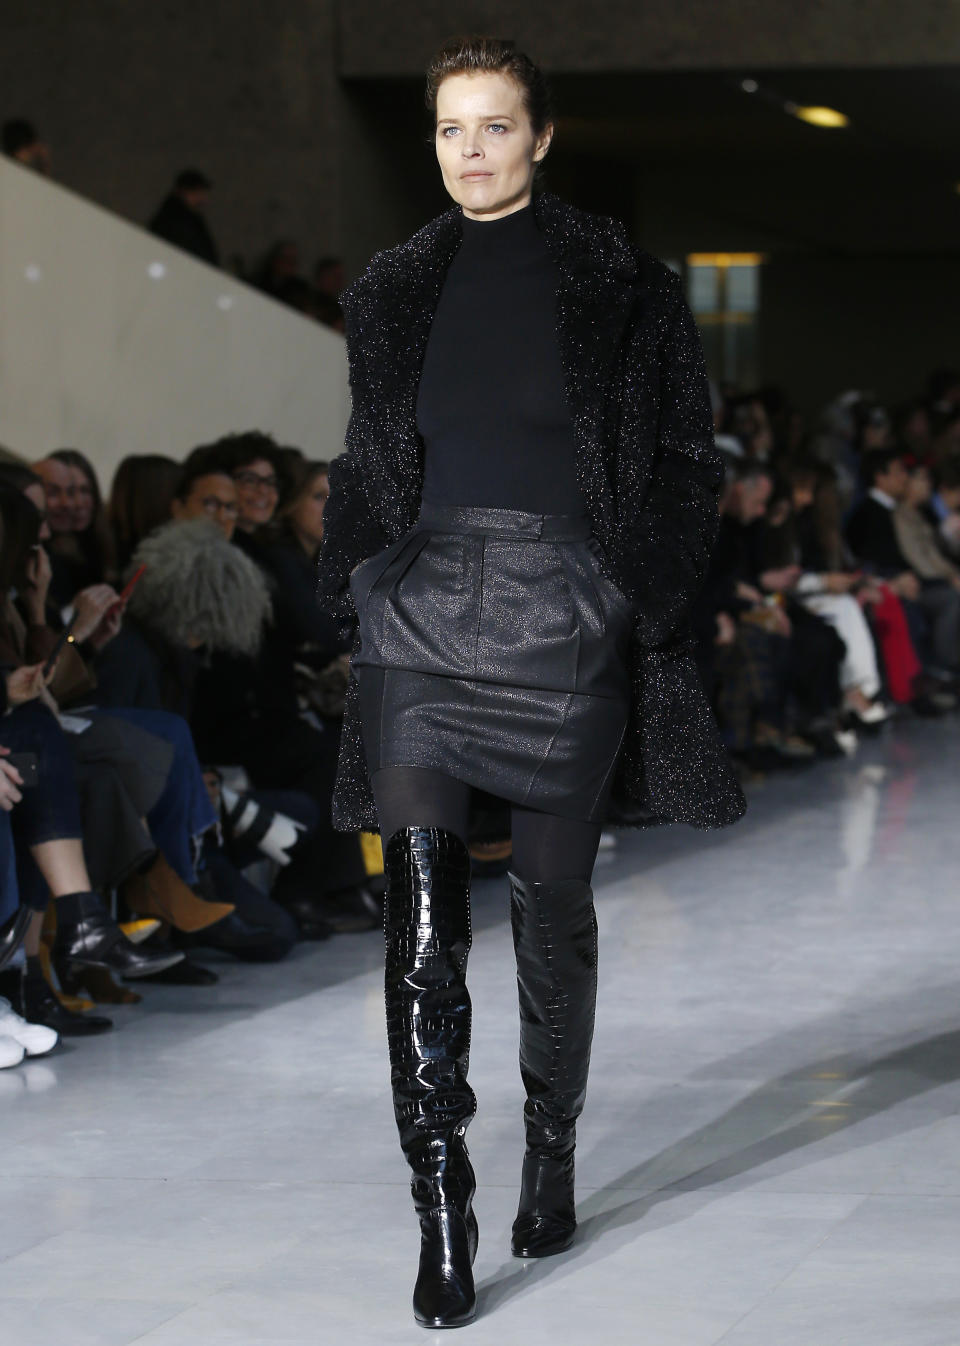 Model Eva Herzigova wears a creation as part of the Max Mara women's Fall-Winter 2019-20 collection, unveiled during the Fashion Week in Milan, Italy, Thursday, Feb. 21, 2019. (AP Photo/Antonio Calanni)